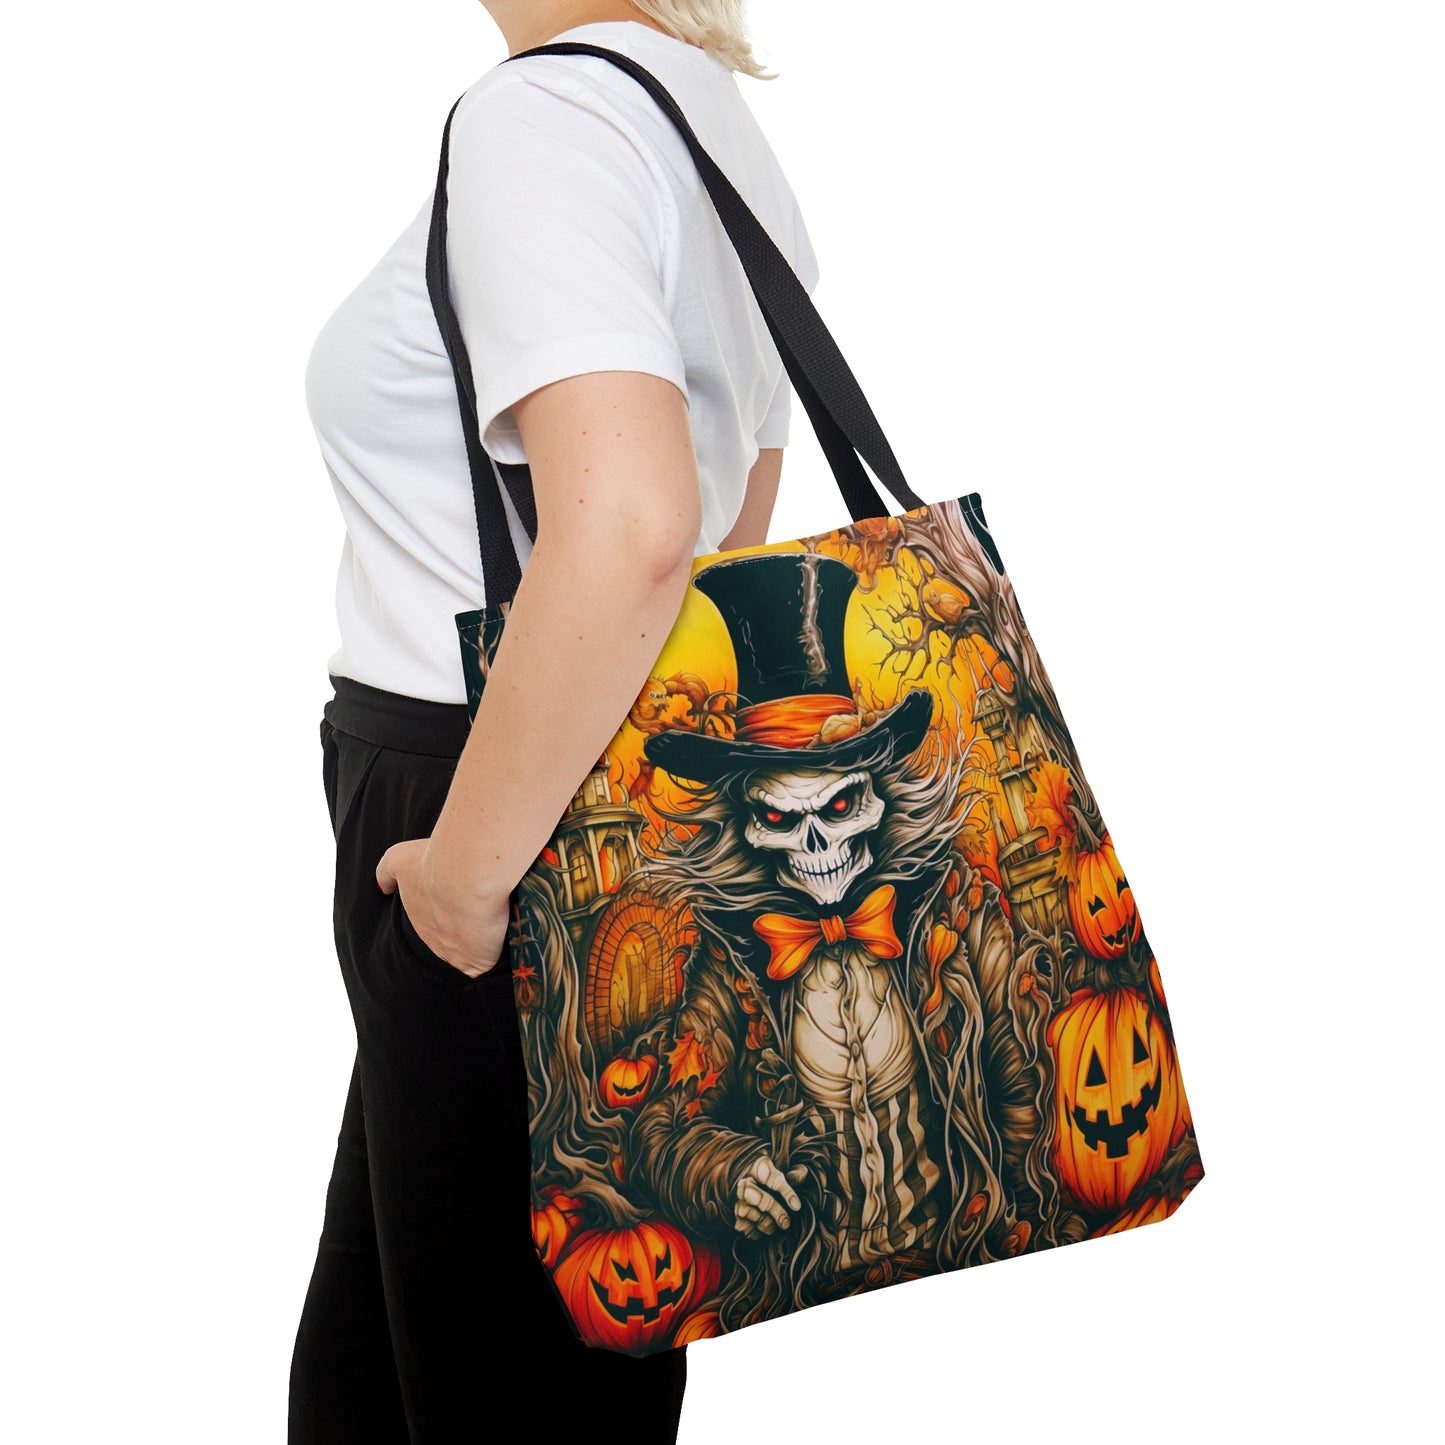 Halloween Skeleton Ghost and pumpkins | Original Art |Tote Bag | All over print, 2 sided